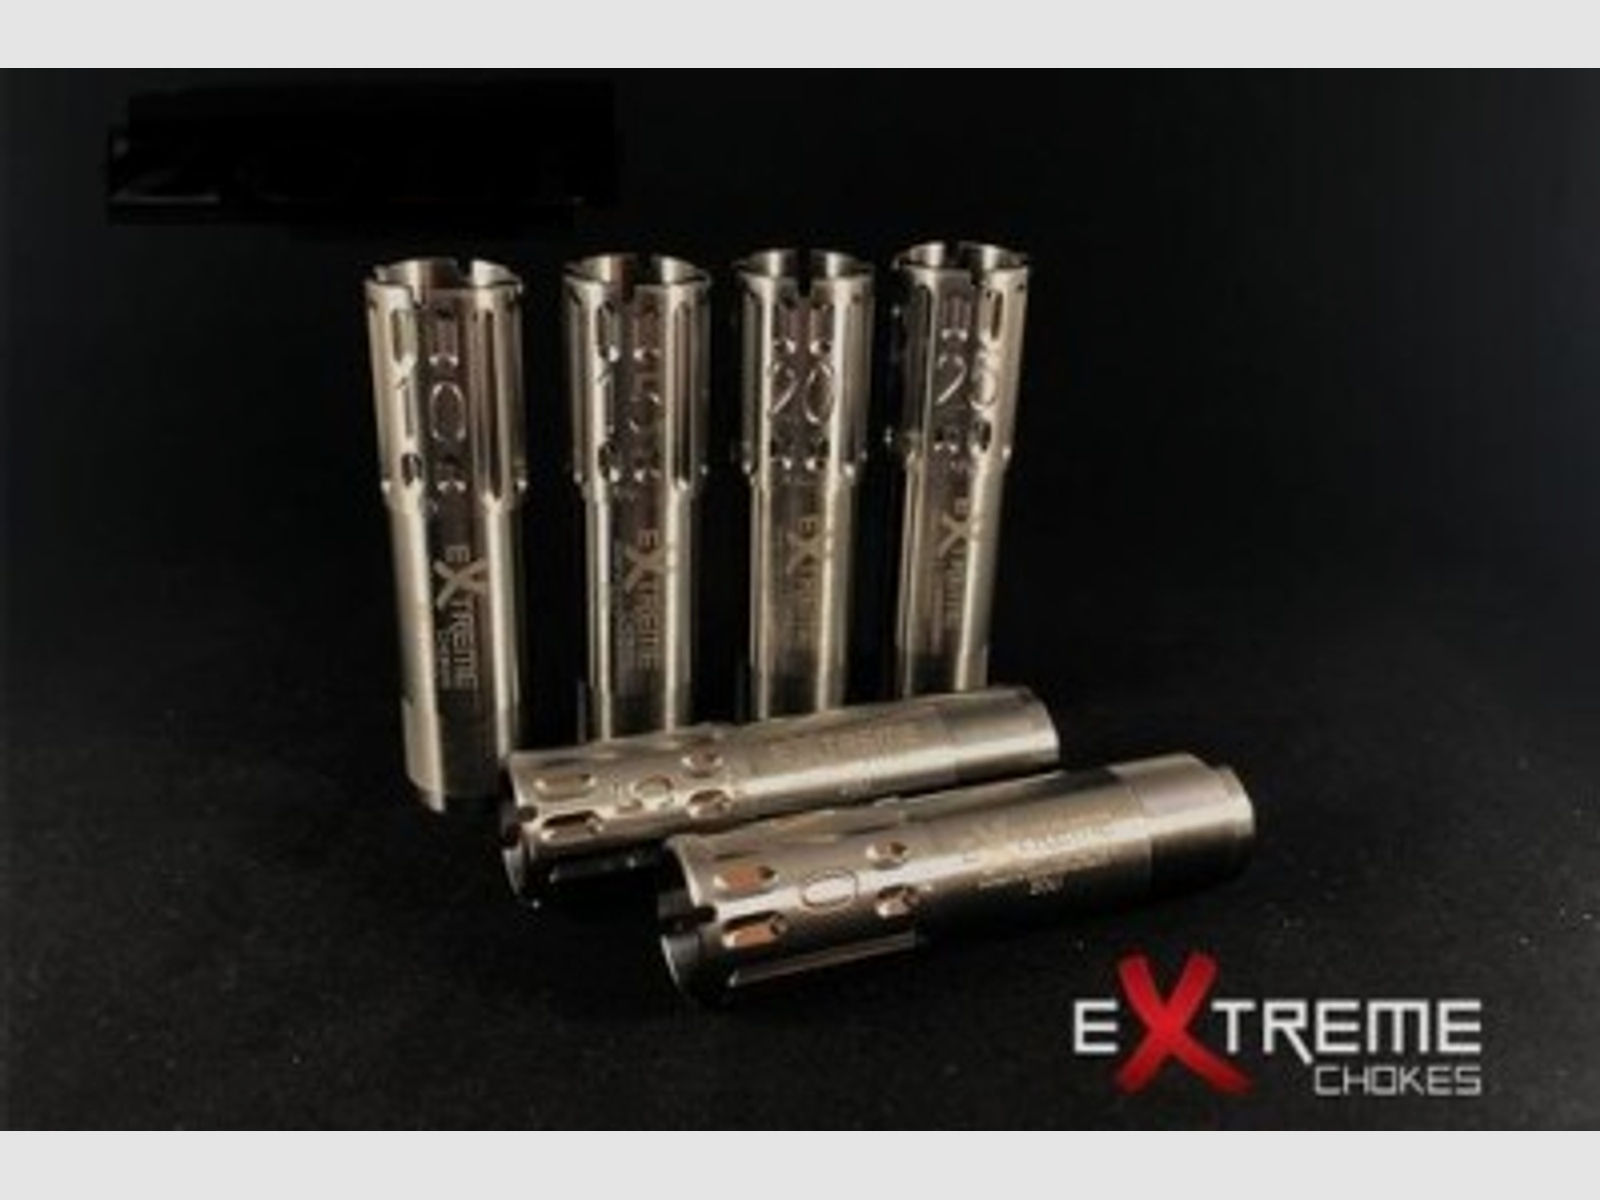 Titanium "EXTREME-CHOKES" made in USA